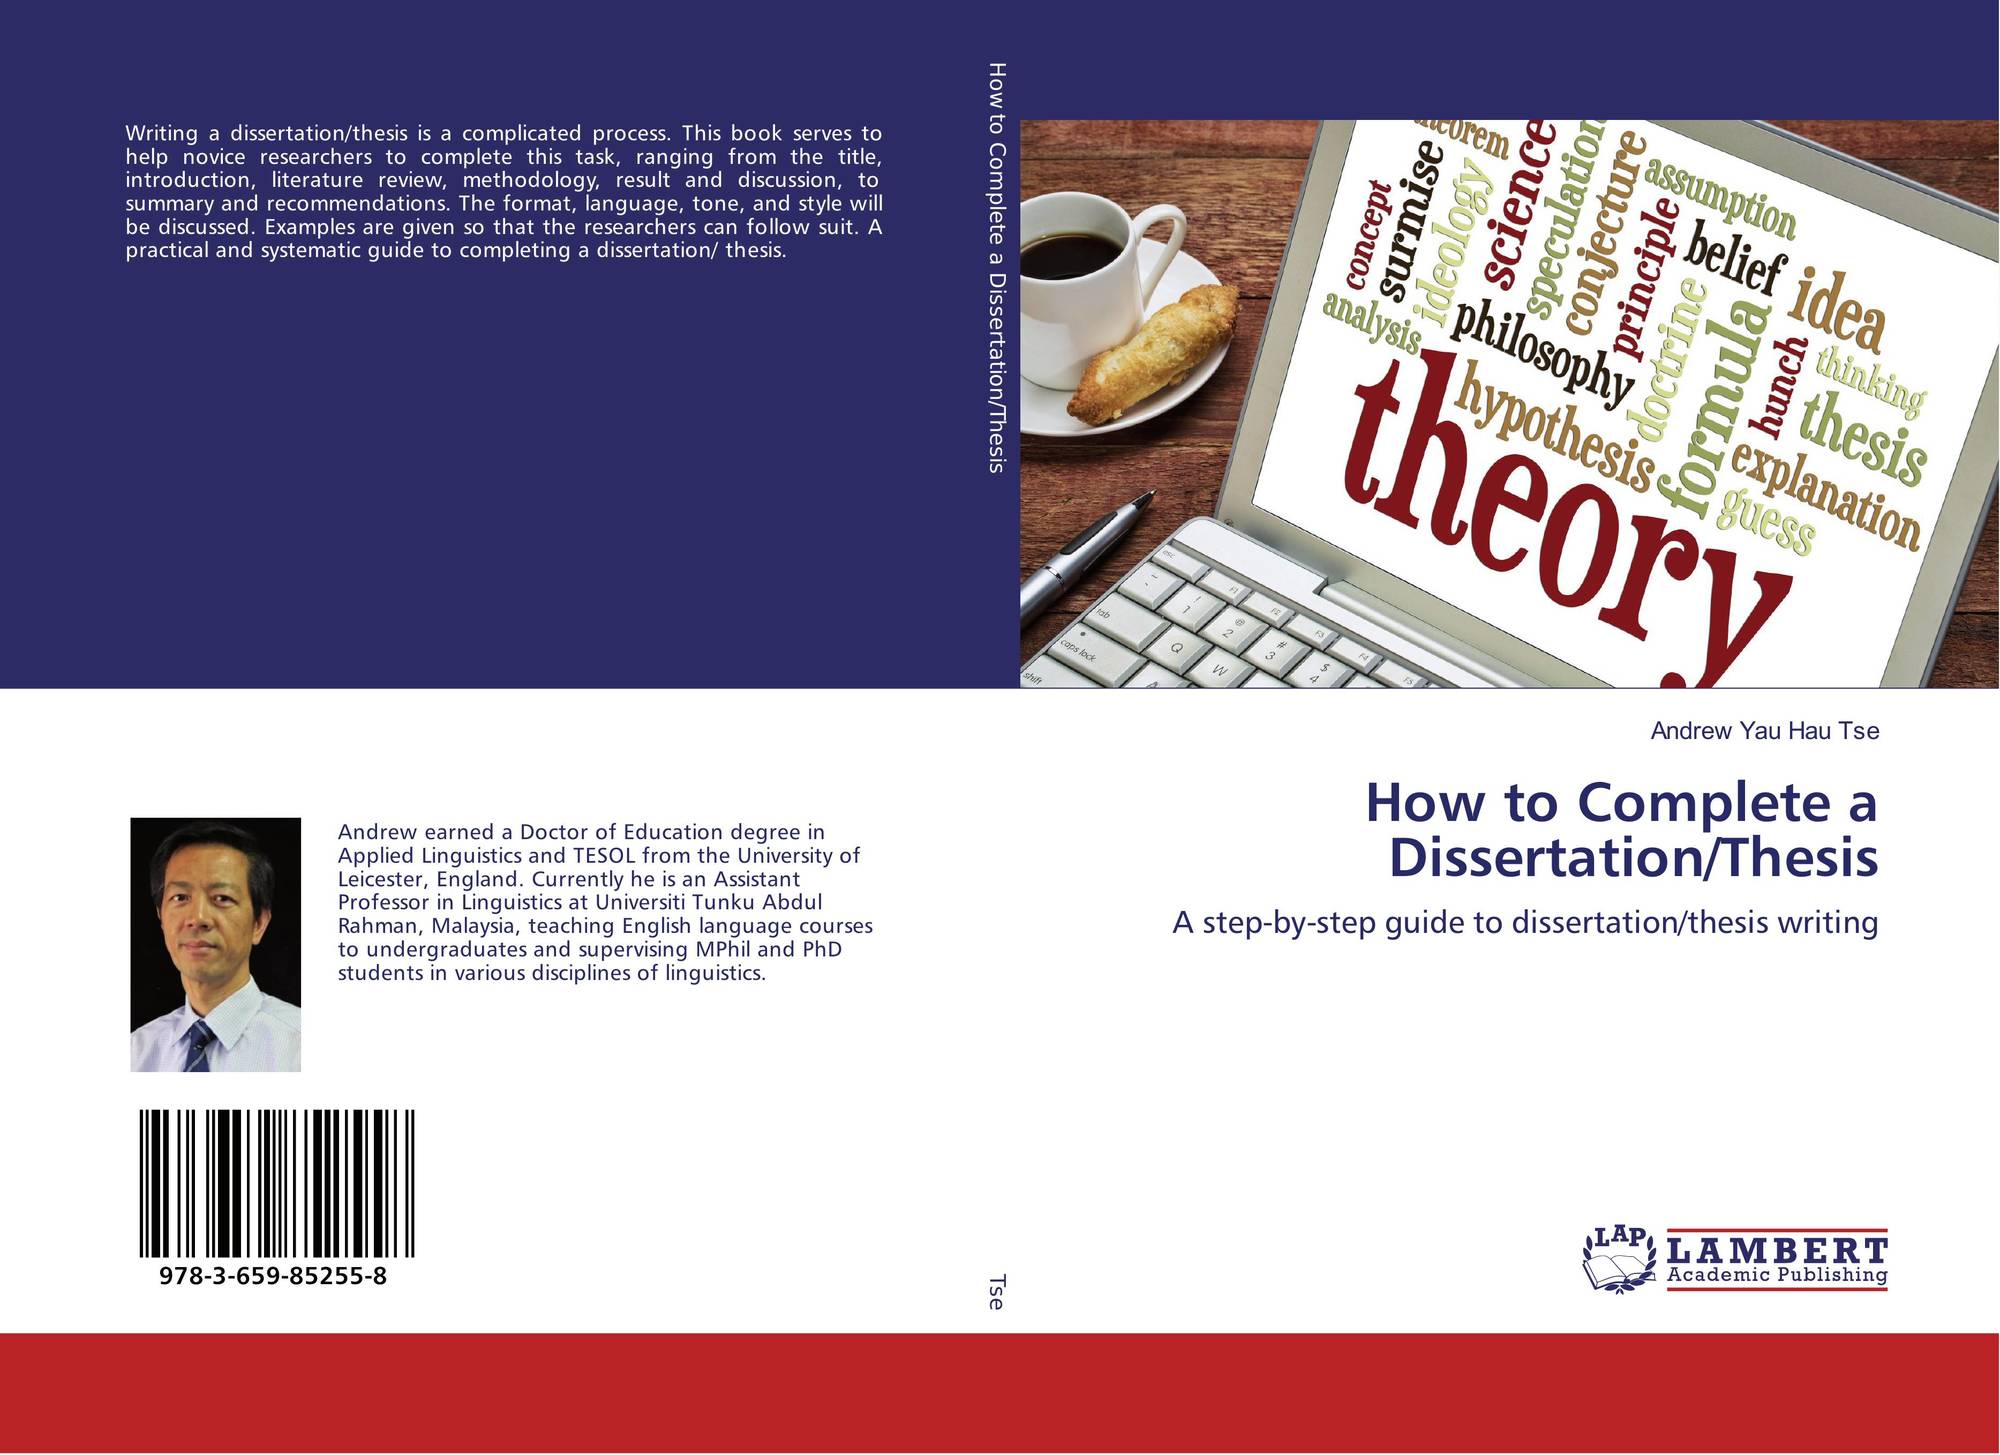 Apa citation for published dissertations